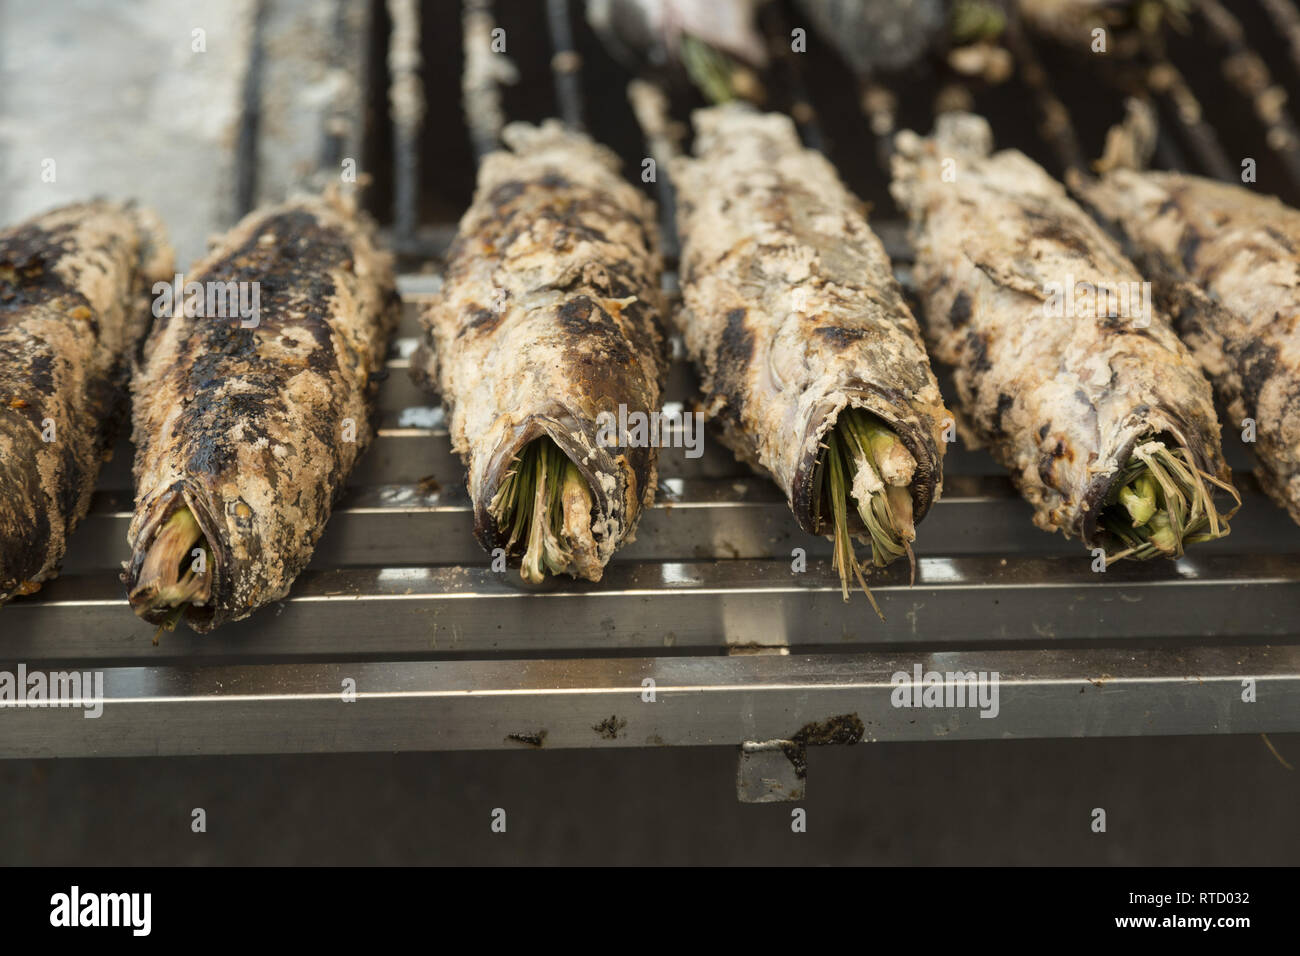 Stuffed fried fishes Stock Photo